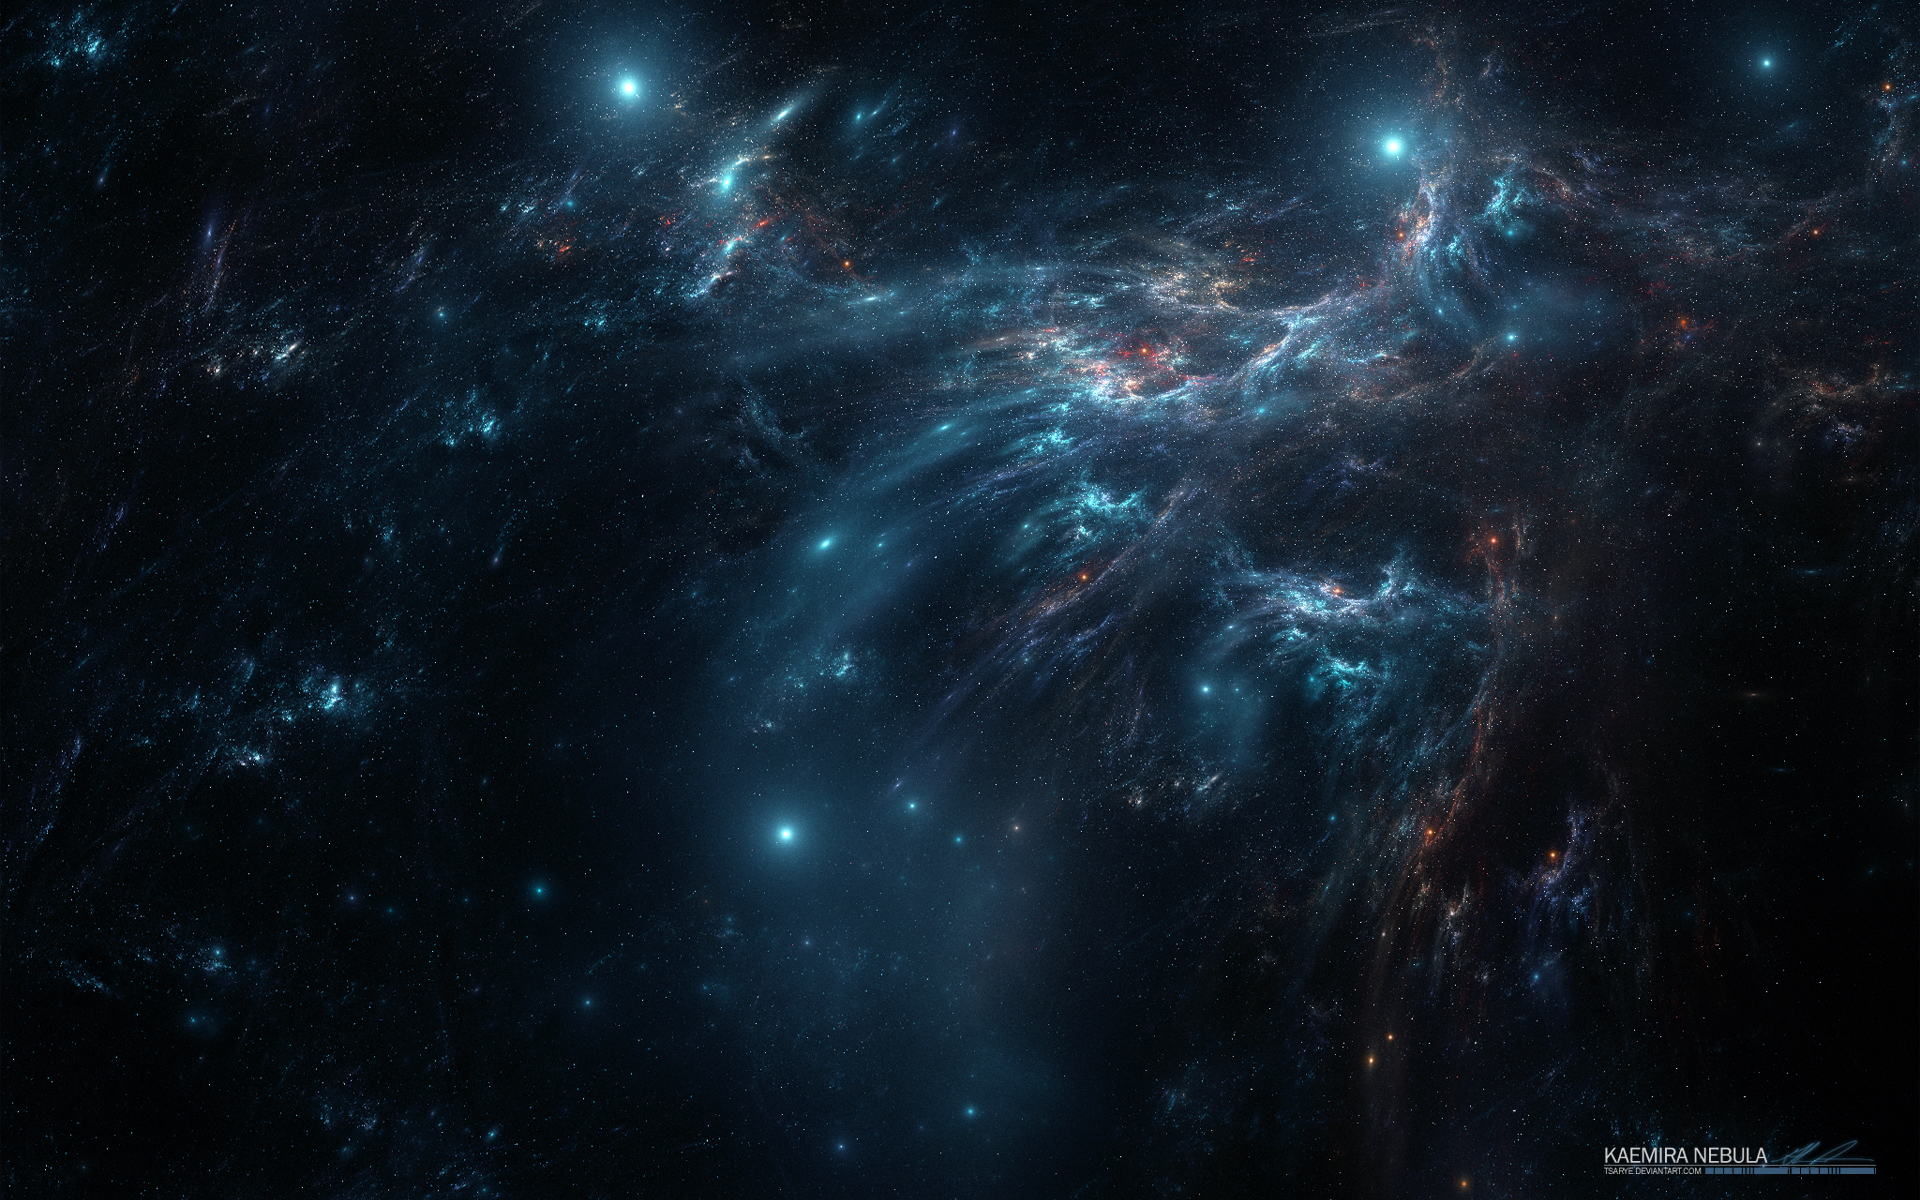 Kaemira Nebula